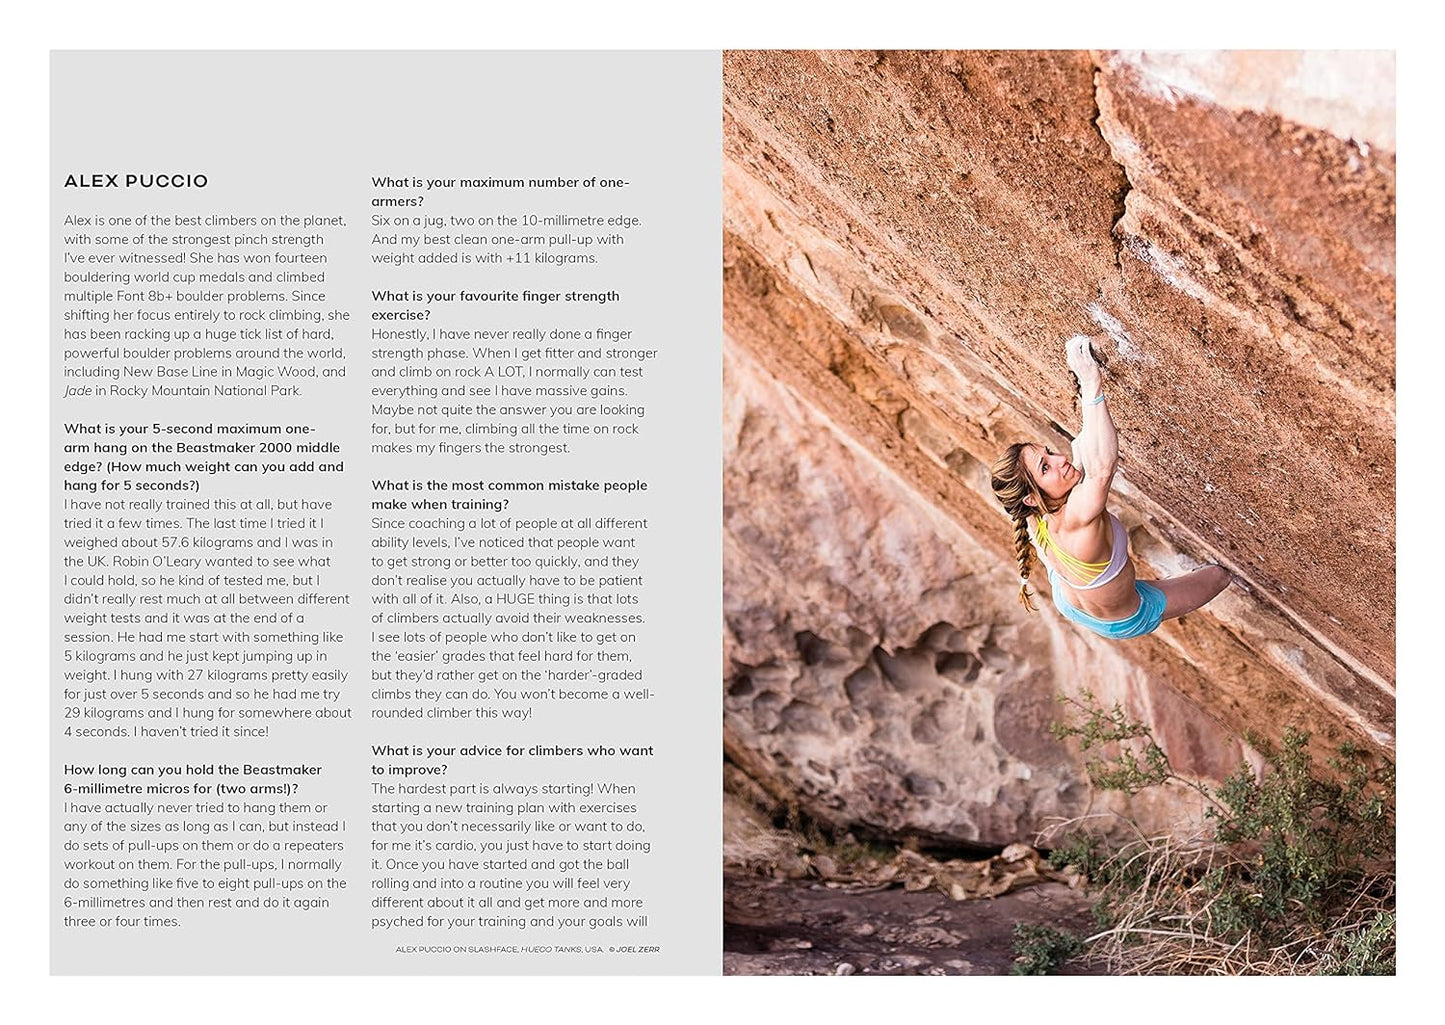 Beastmaking: A fingers-first approach to becoming a better climber